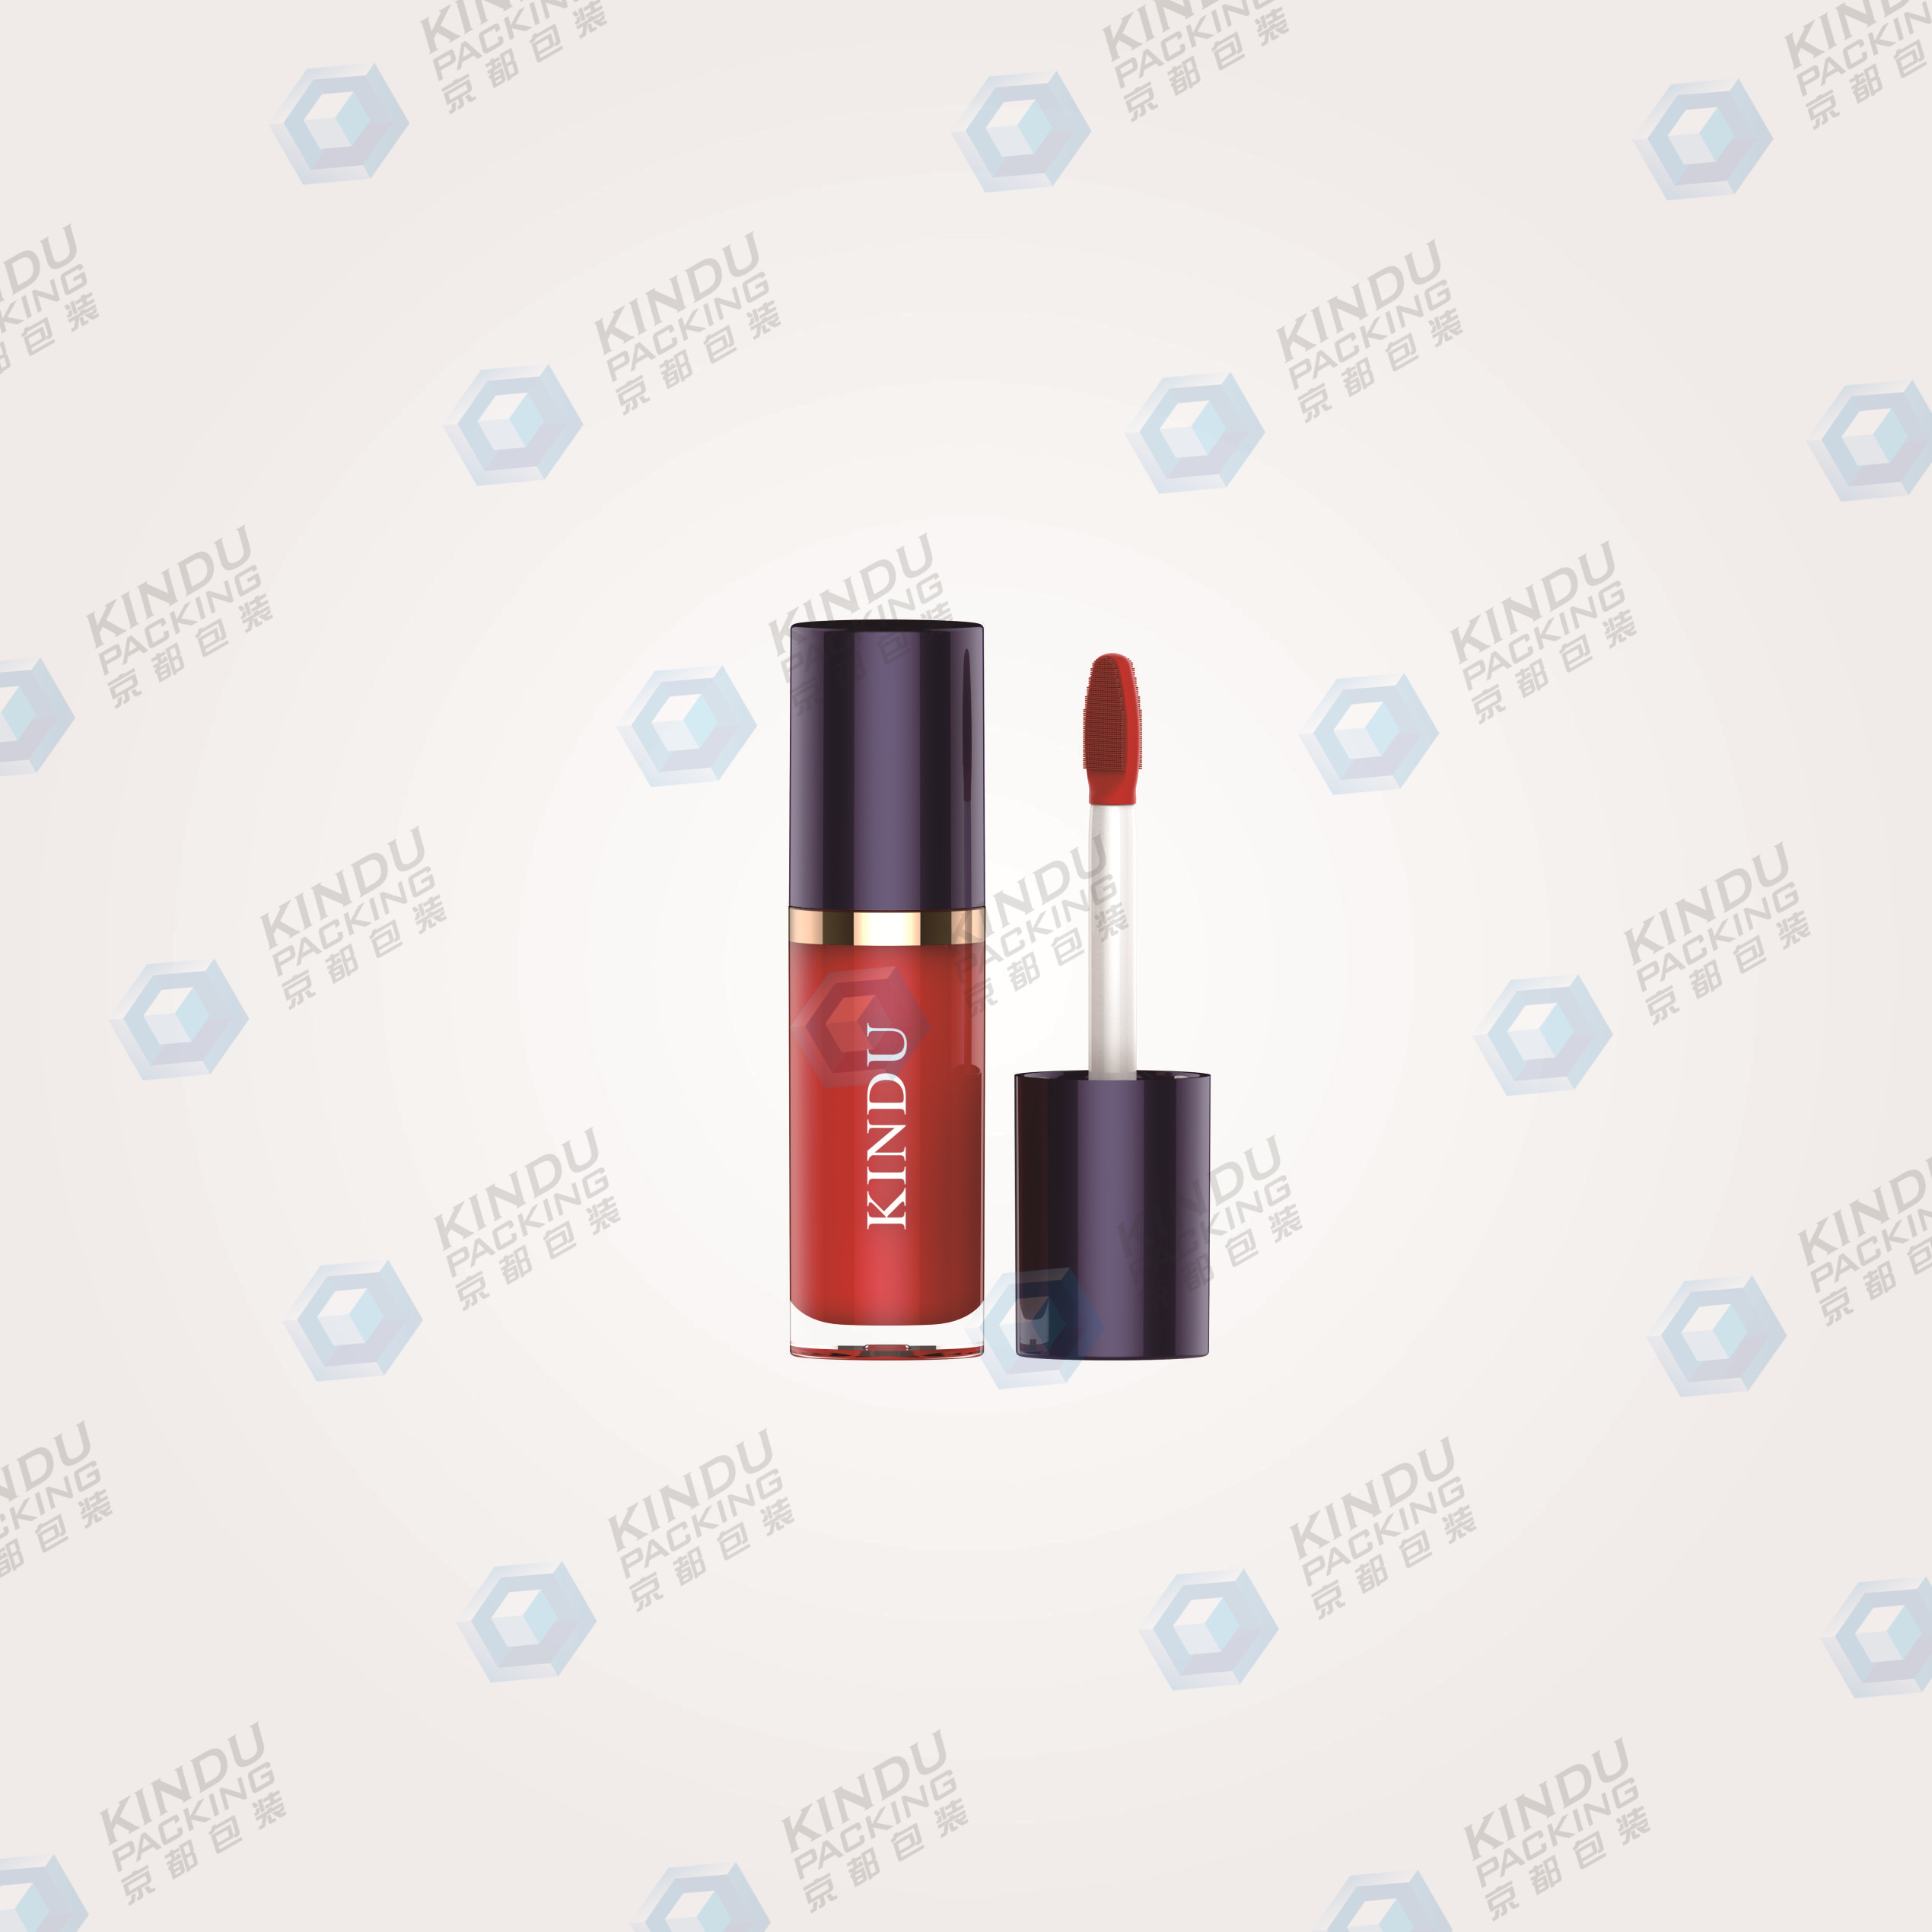 Round lip gloss packaging (ZH-J0395)